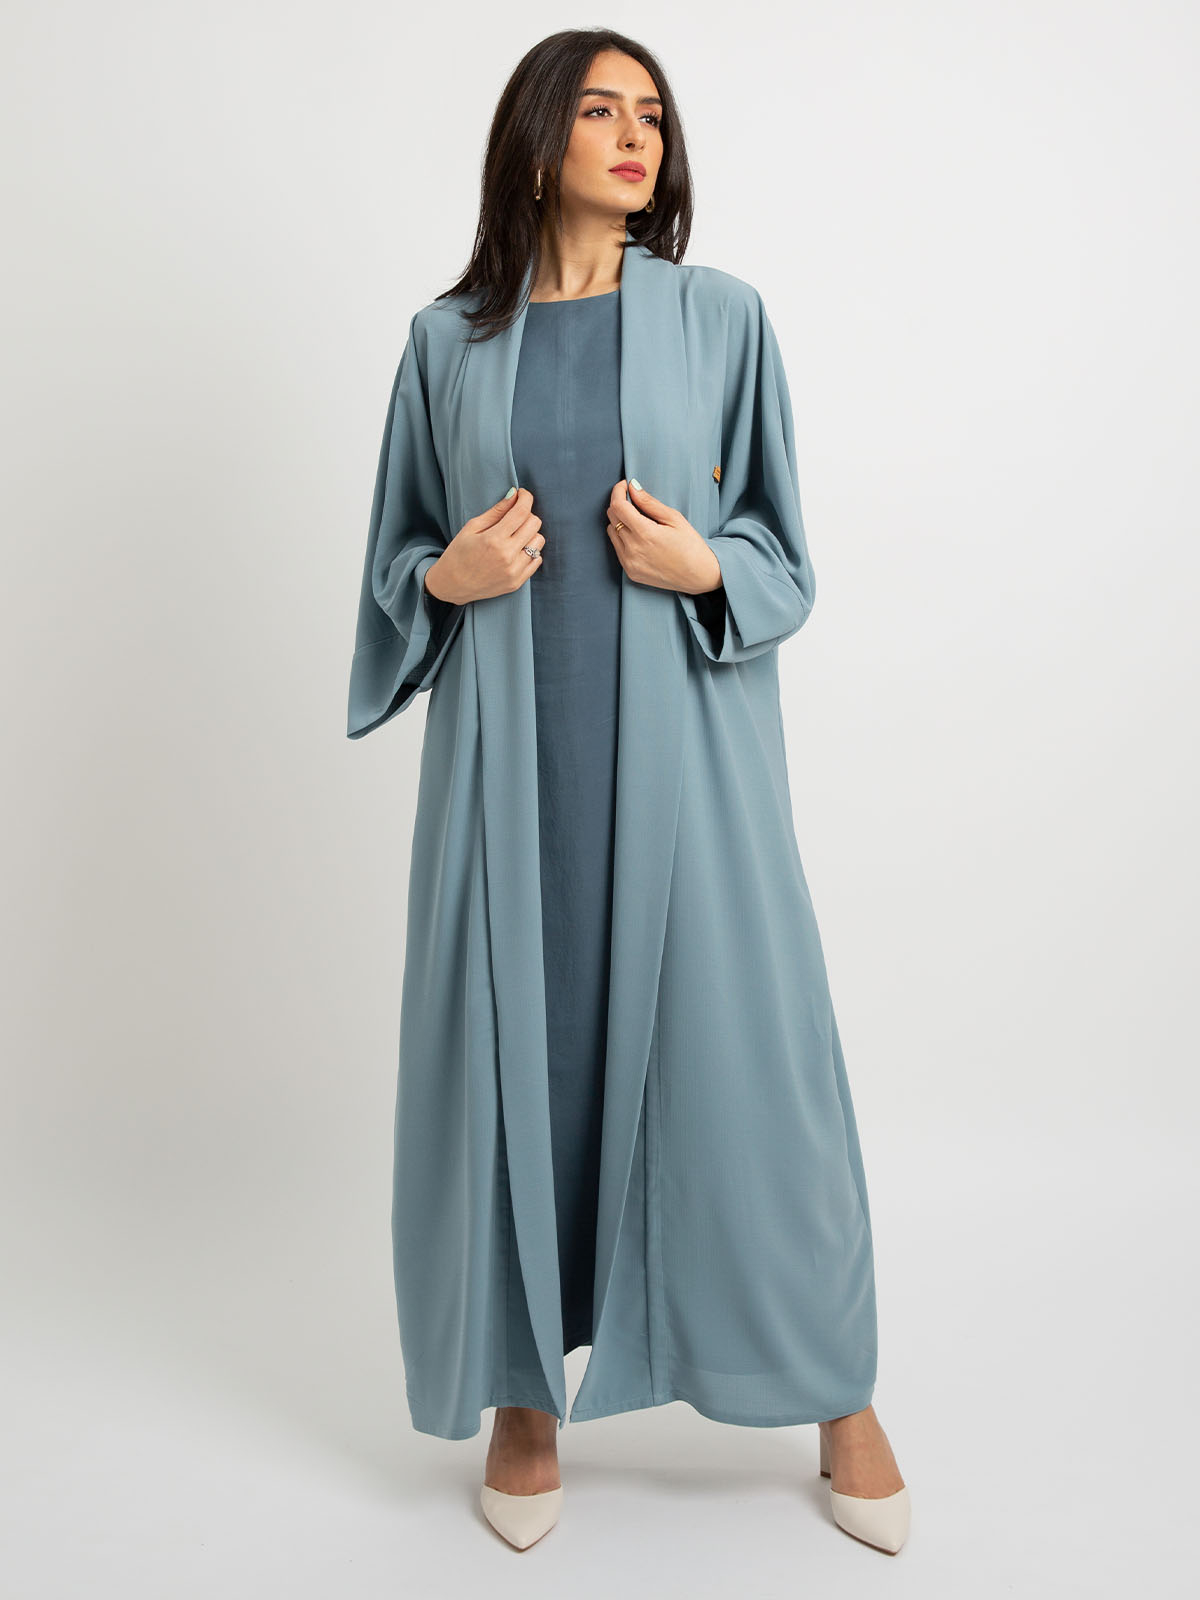 Kaafmeem women clothing wide cut blue color open long kimono abaya in lightweight fabric